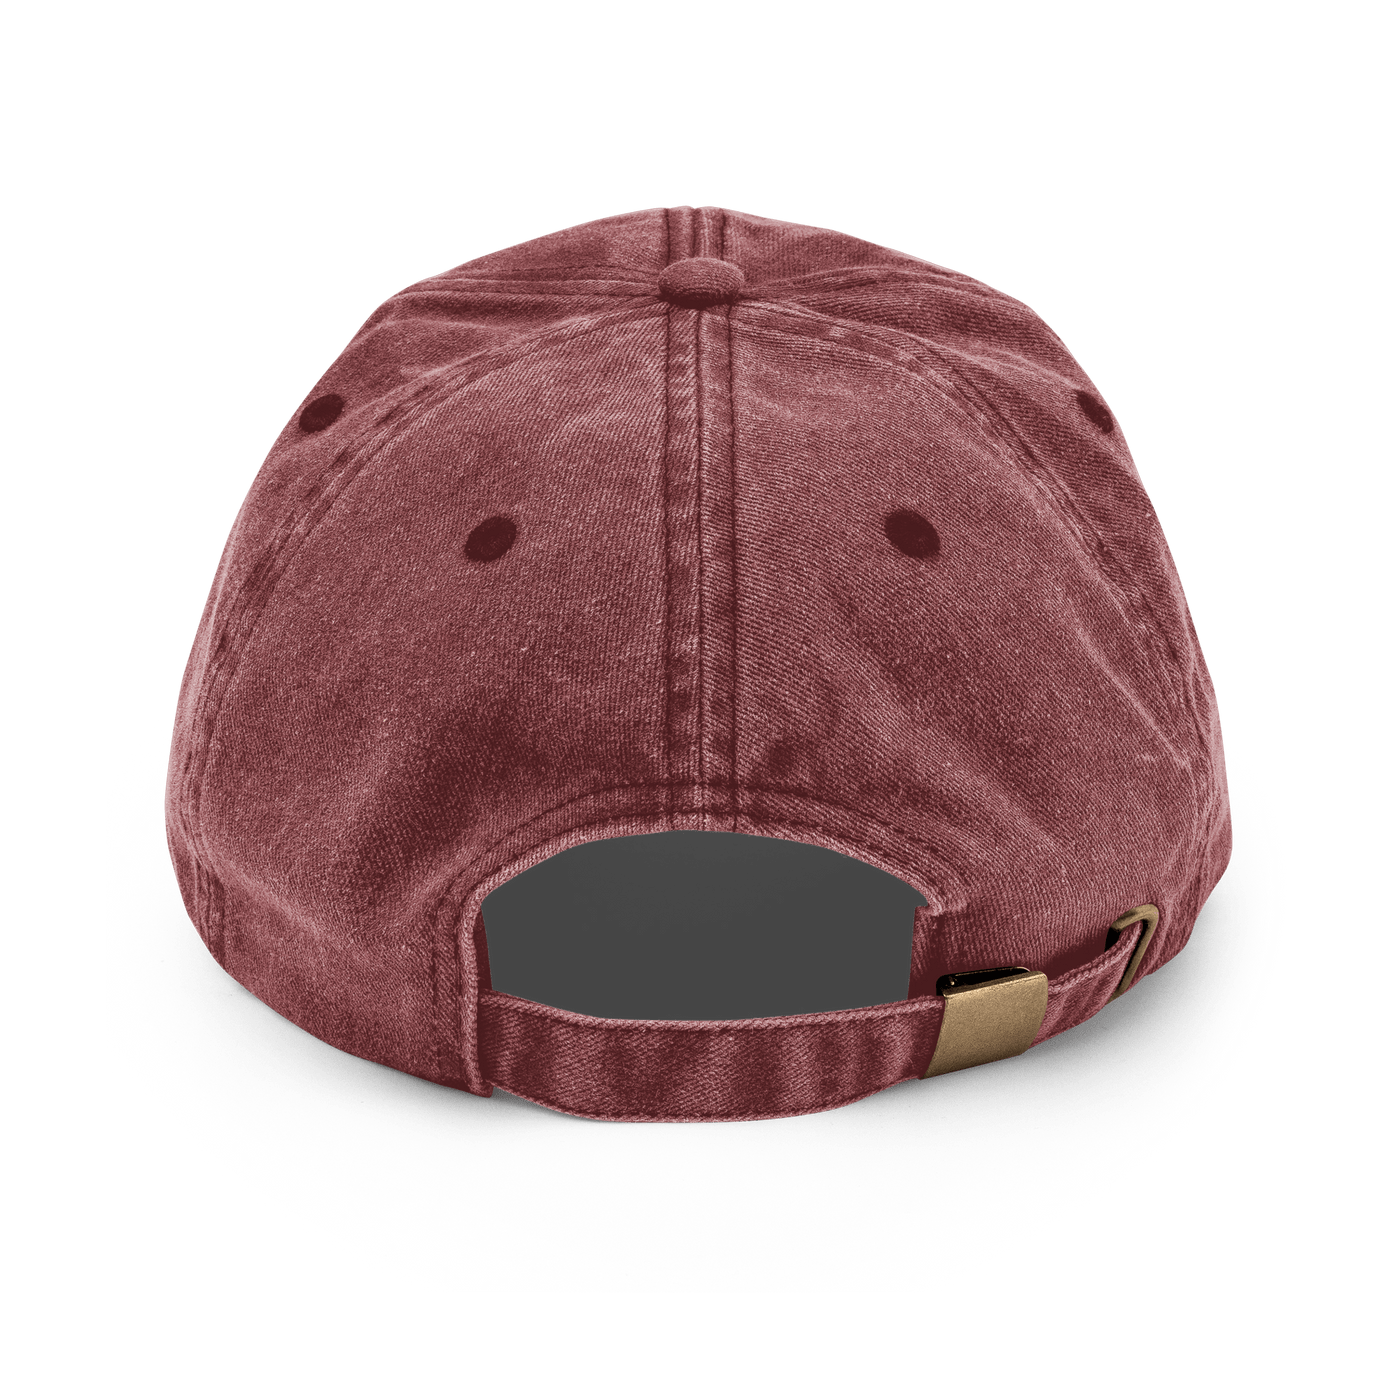 Hangman Vintage Hat - Vintage Denim - - Just Another Cap Store